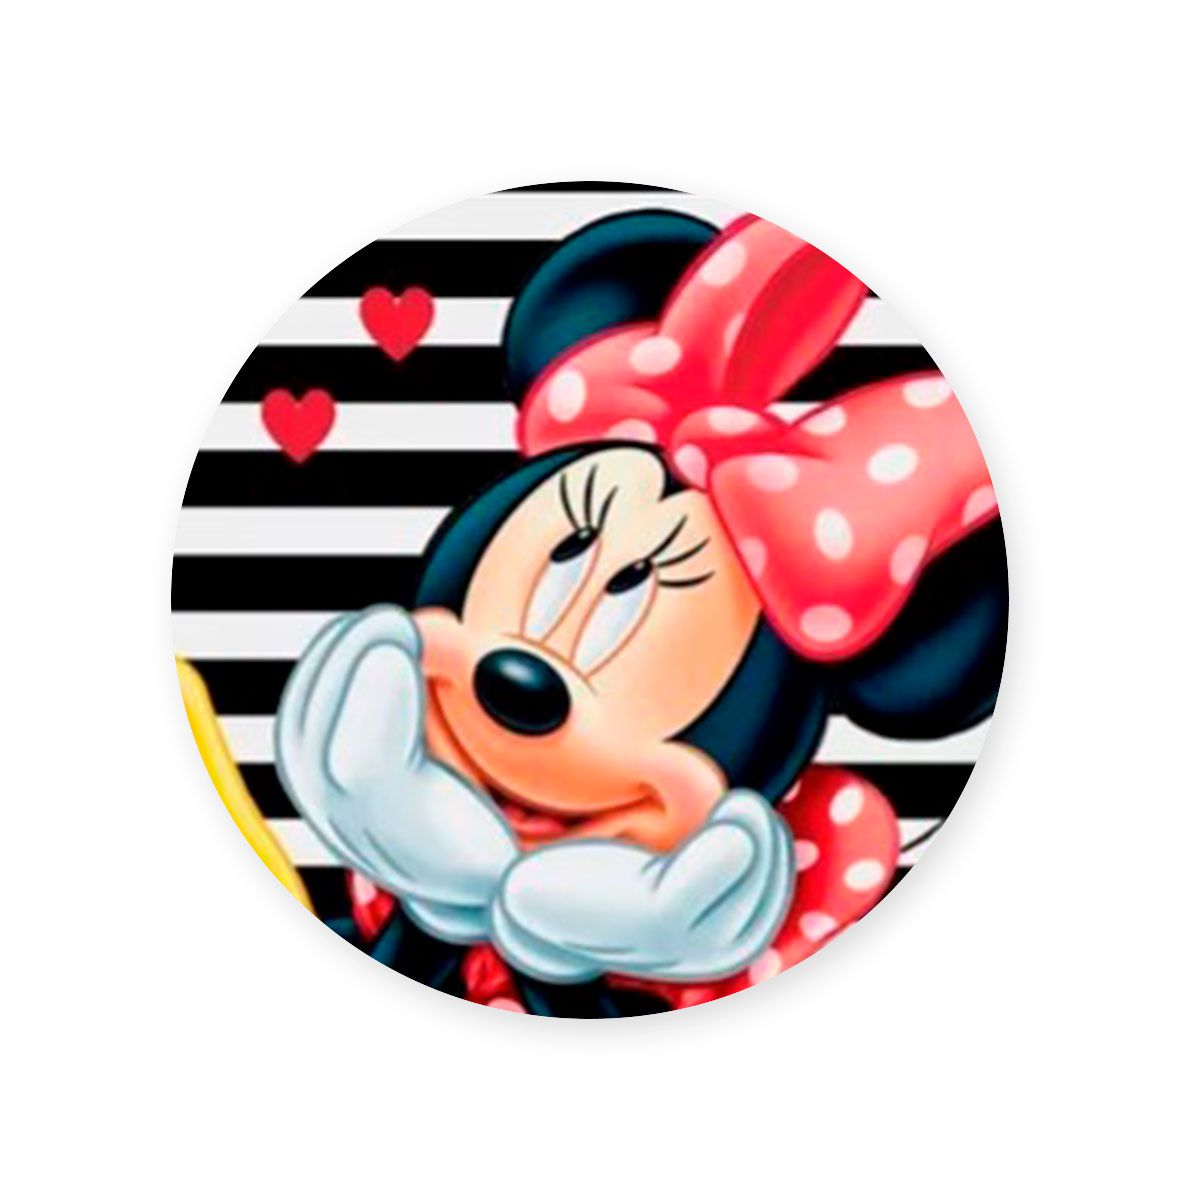 Capa Painel Redondo Sublimados Tema Minnie Mouse 3... - Painel Festivo